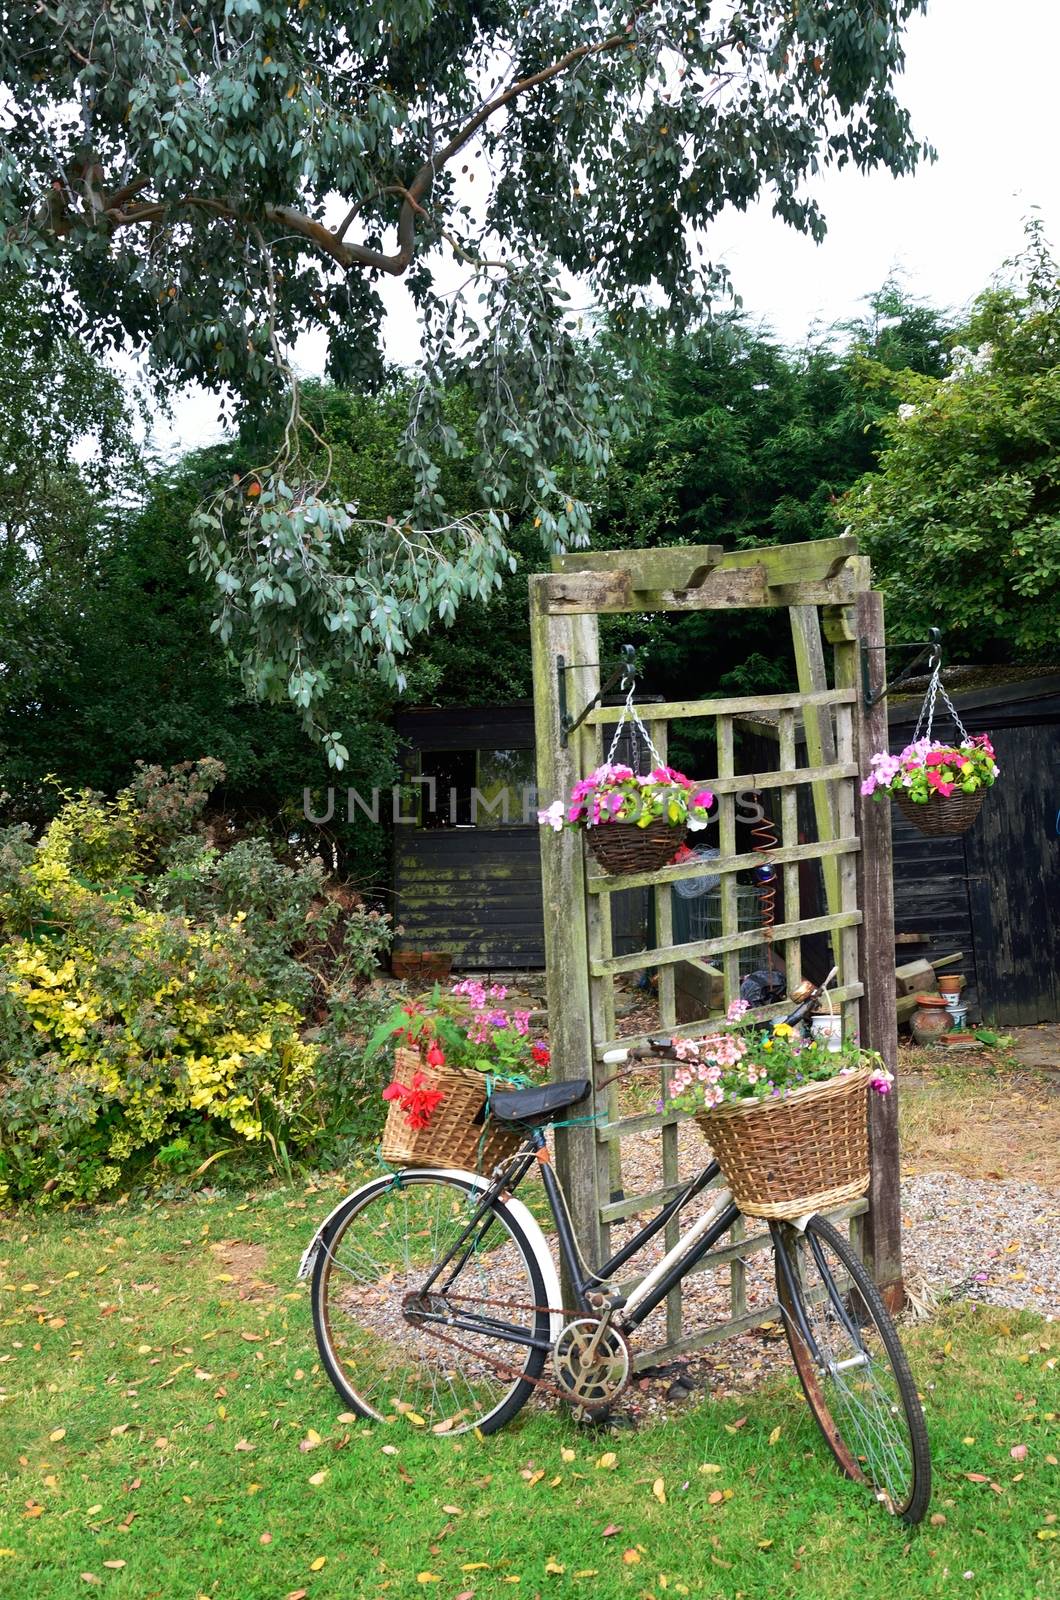 Bike with flowers in garden